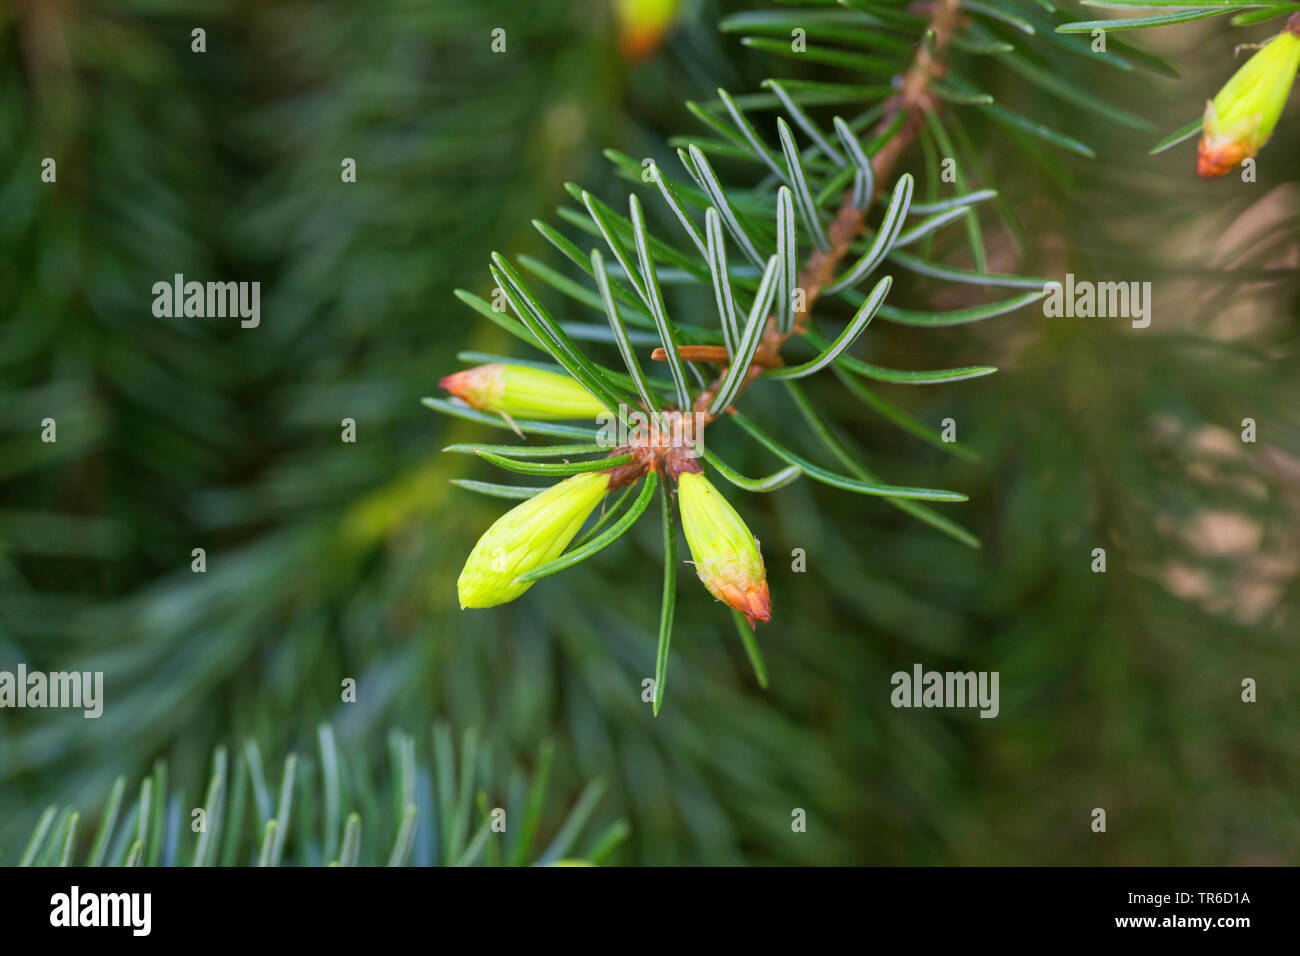 Serbian Spruce (Picea omorika), needle shooting Stock Photo